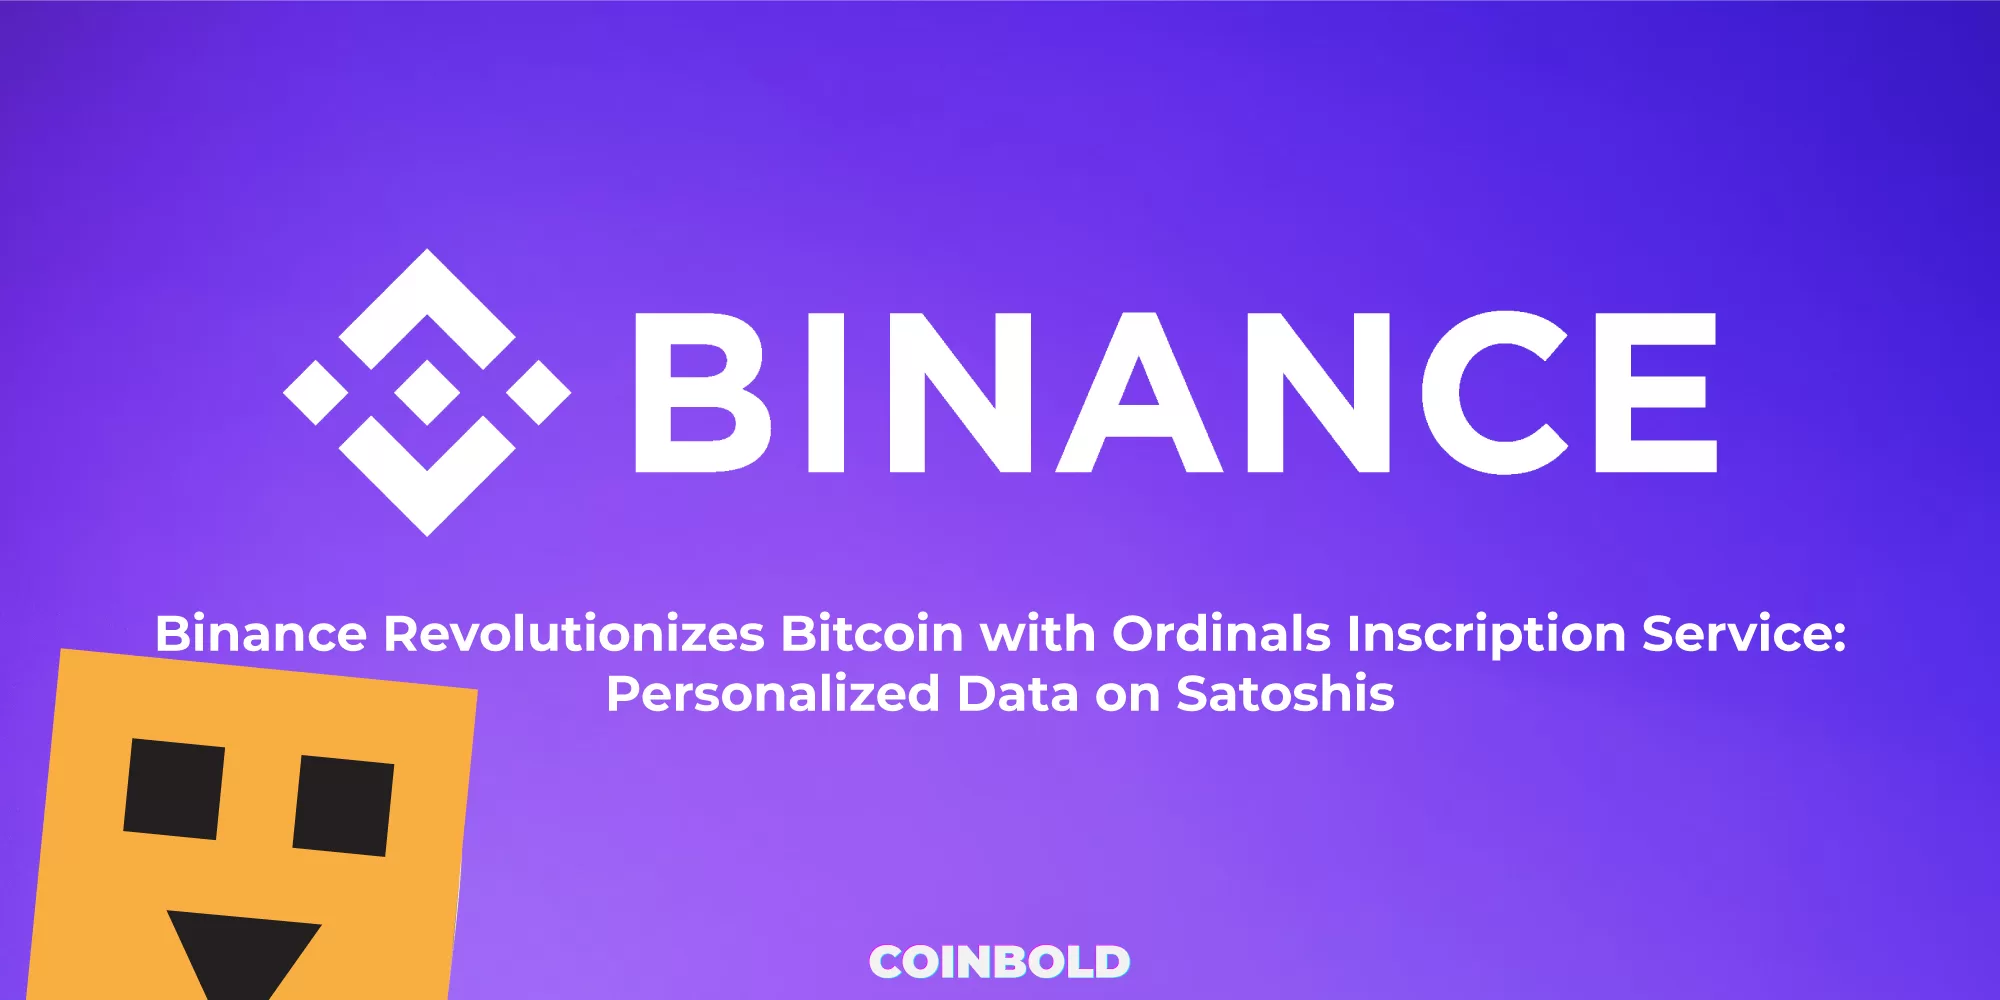 Binance Revolutionizes Bitcoin with Ordinals Inscription Service Personalized Data on Satoshis